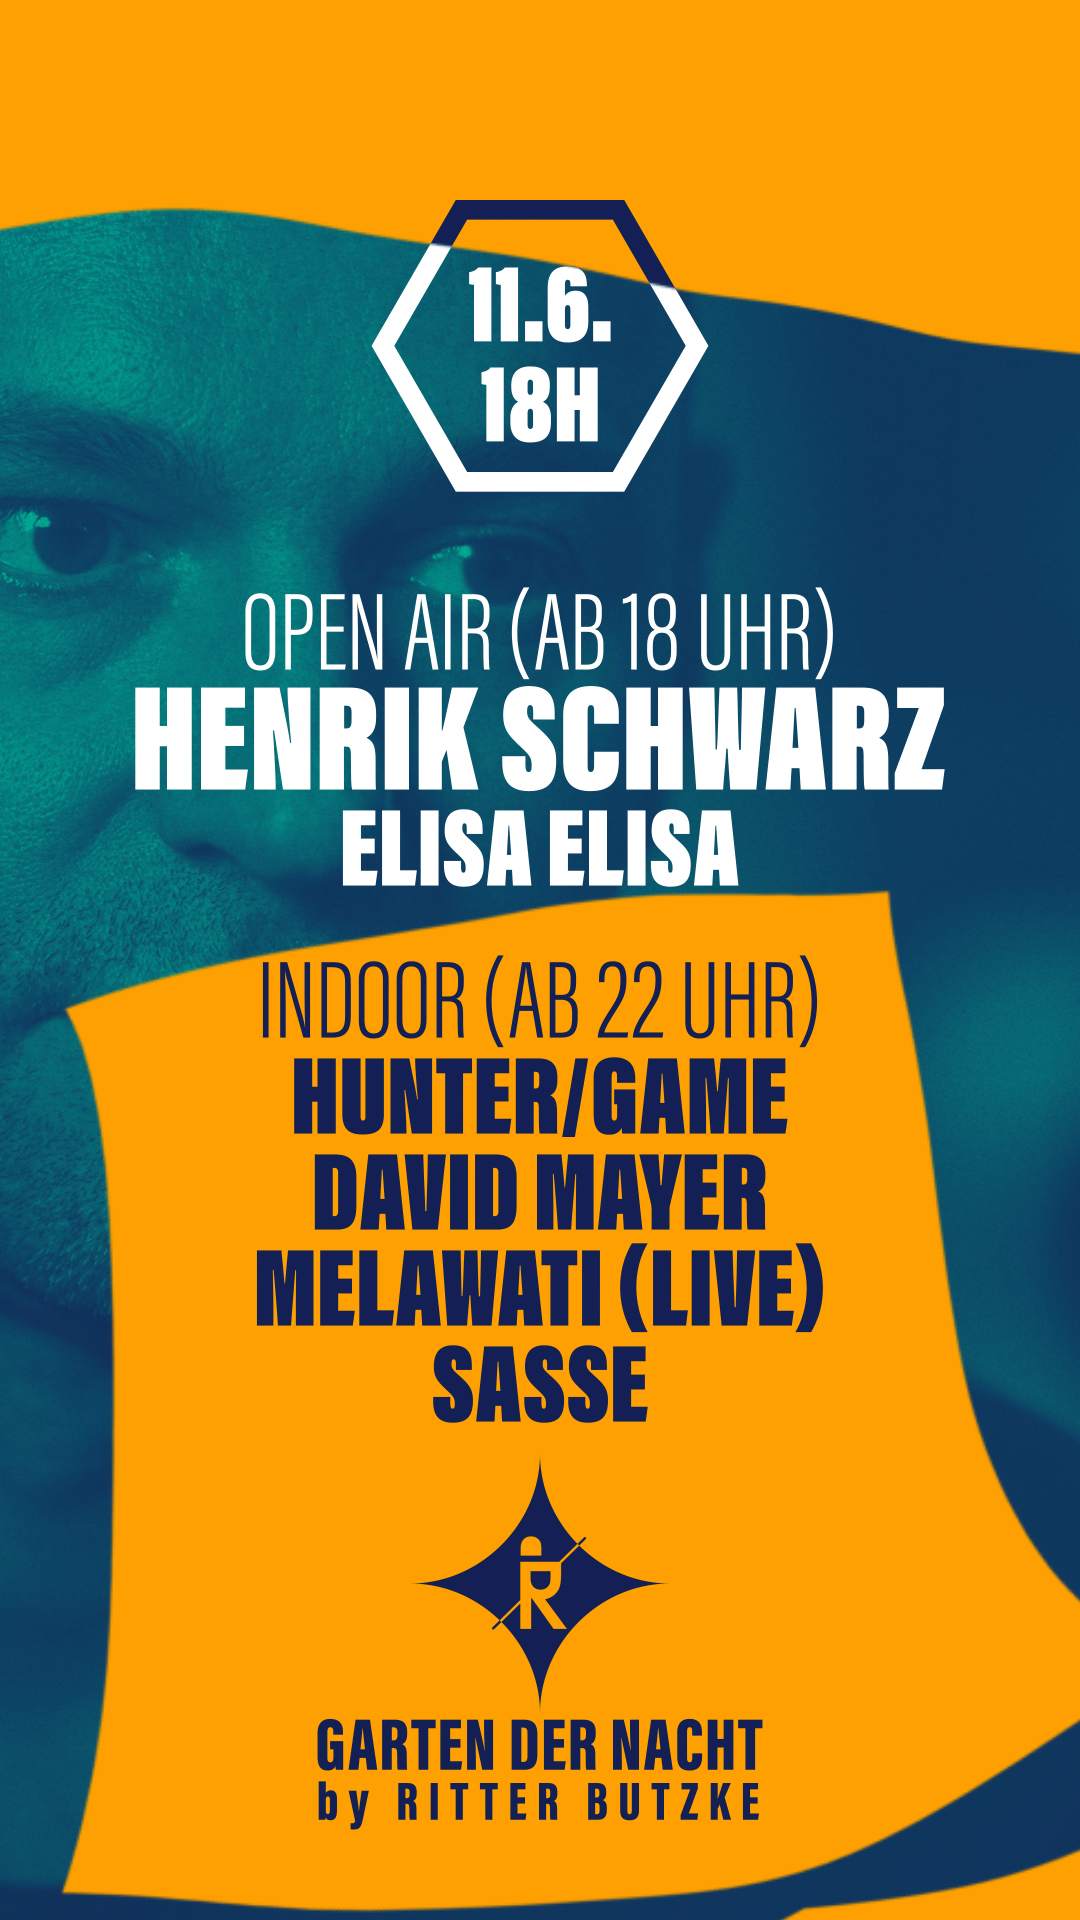 Henrik Schwarz (live) at Kulturgarten Open Air - フライヤー裏